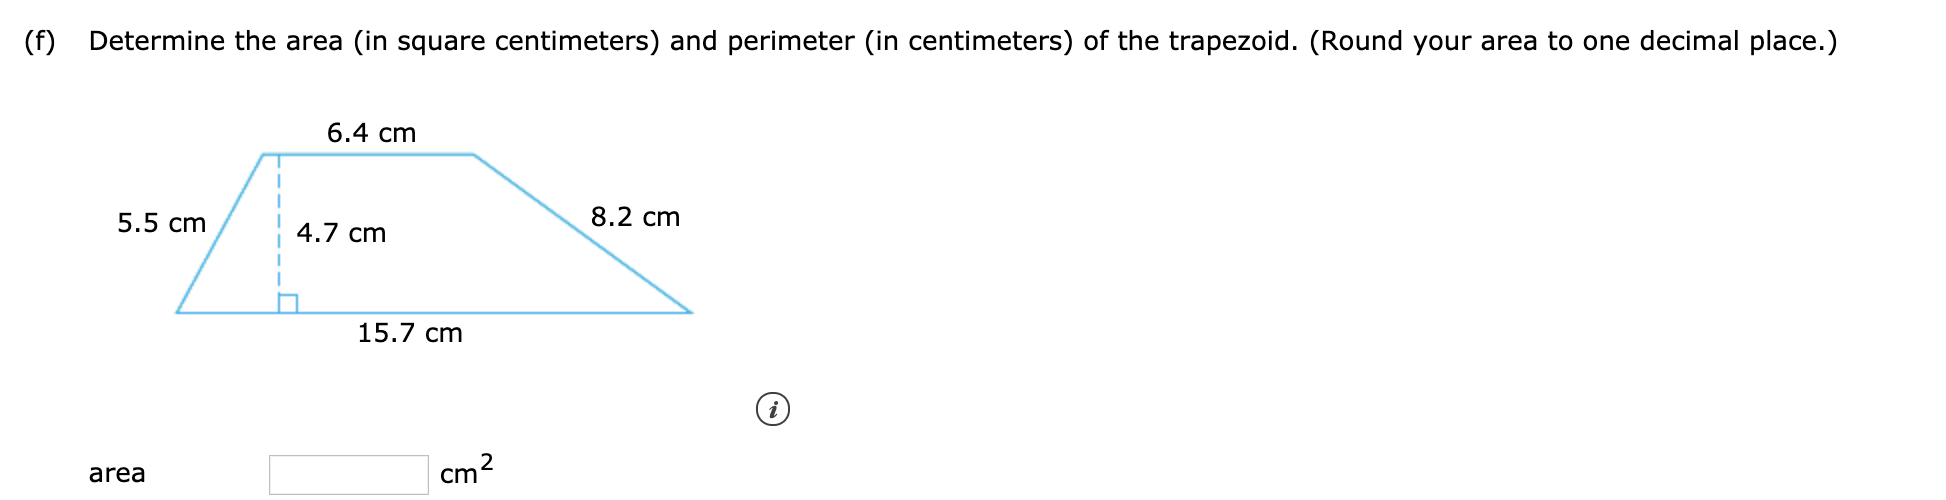 (f)
Determine the area (in square centimeters) and perimeter (in centimeters) of the trapezoid. (Round your area to one decimal place.)
6.4 cm
5.5 cm
8.2 cm
4.7 cm
15.7 cm
|cm2
area
